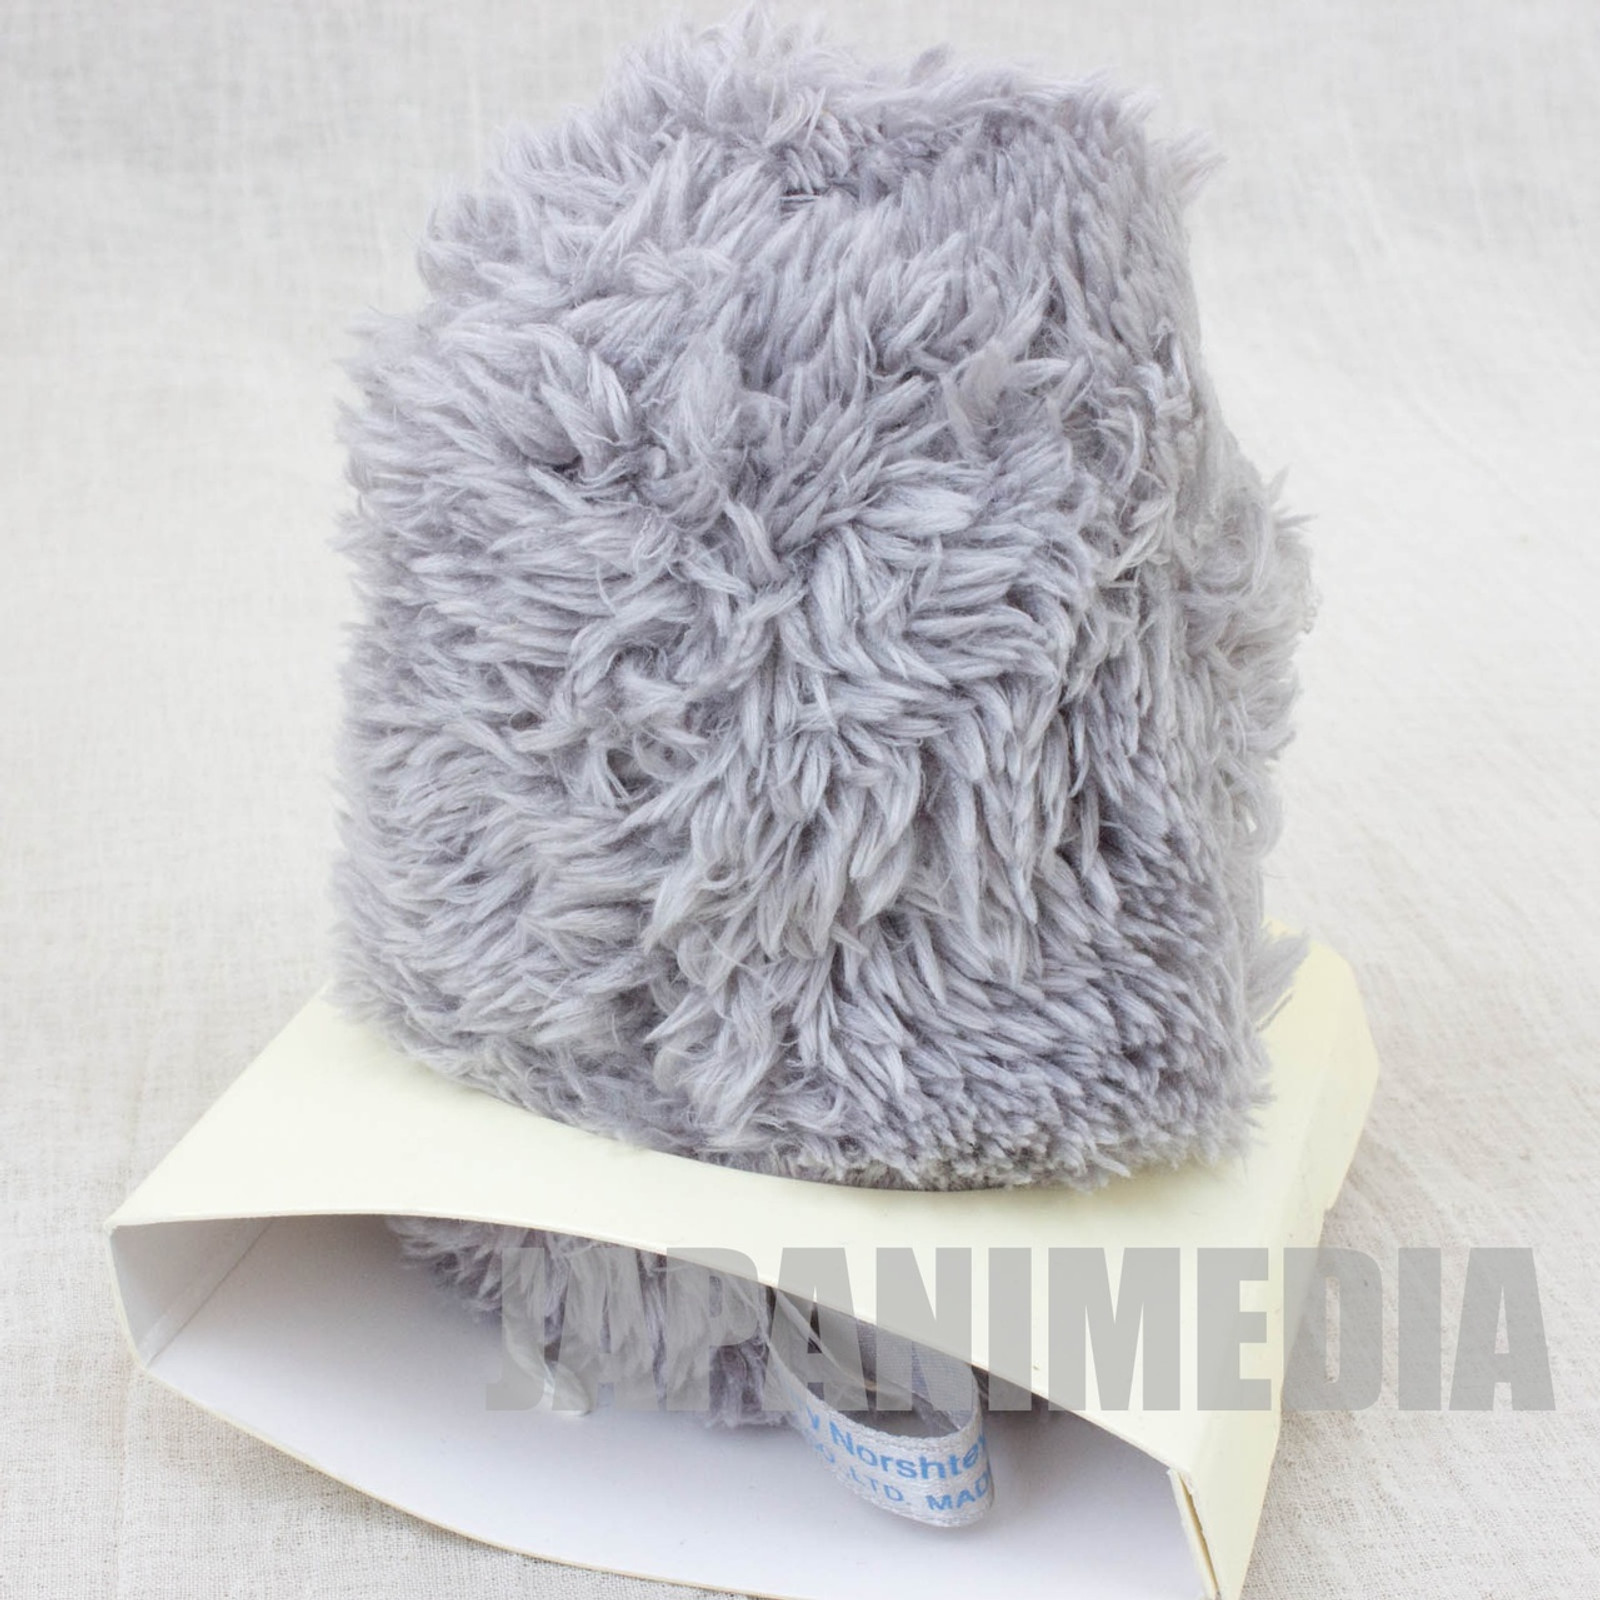 Super RARE! A Hedgehog Lost in Fog Mini Plush Doll Yury Norshteyn Cube JAPAN